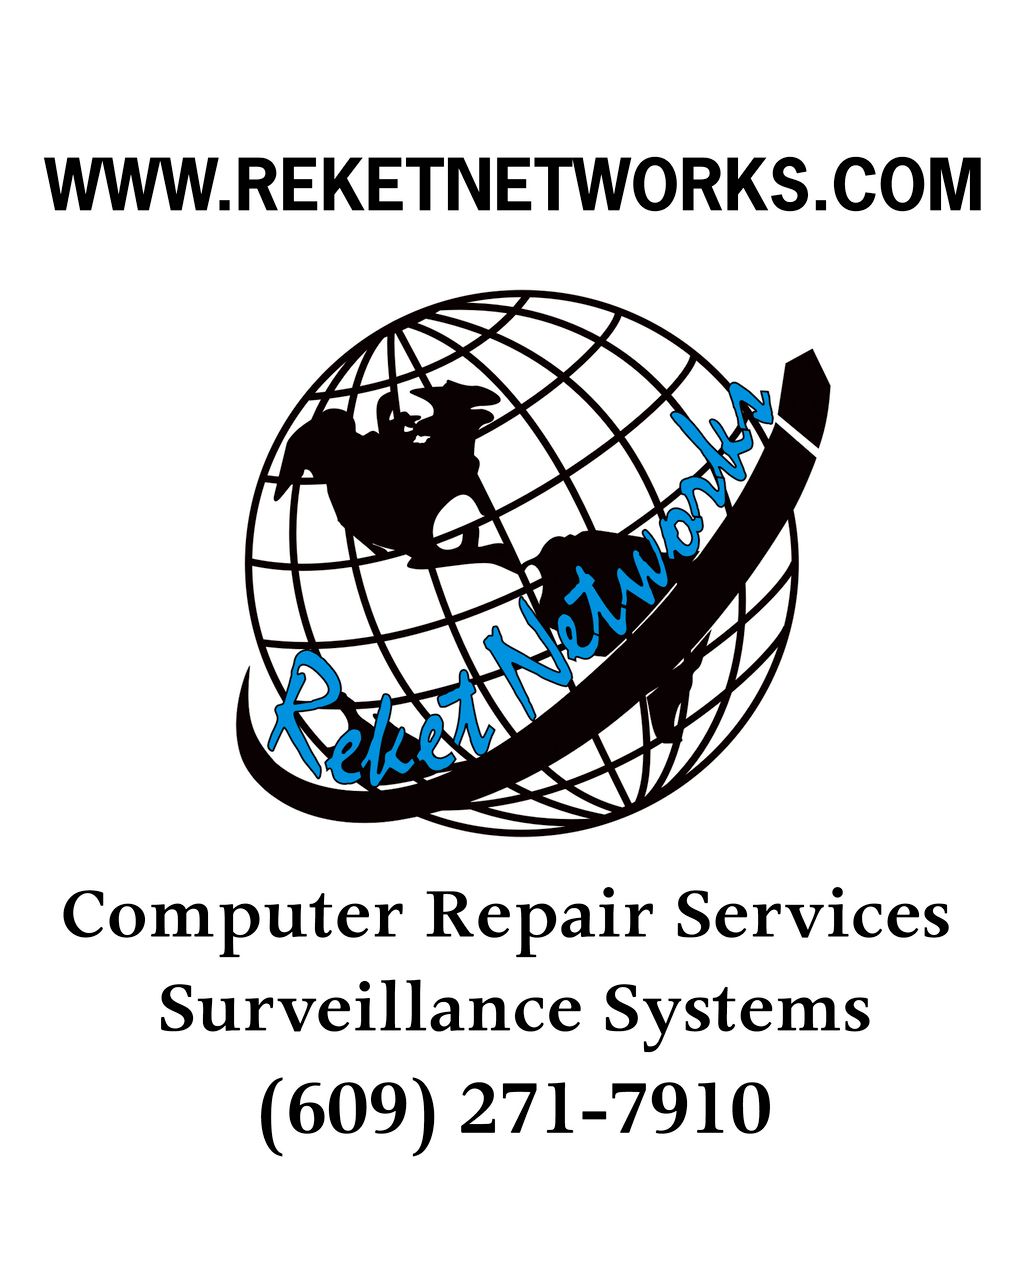 Reket Networks - Computers & Surveillance